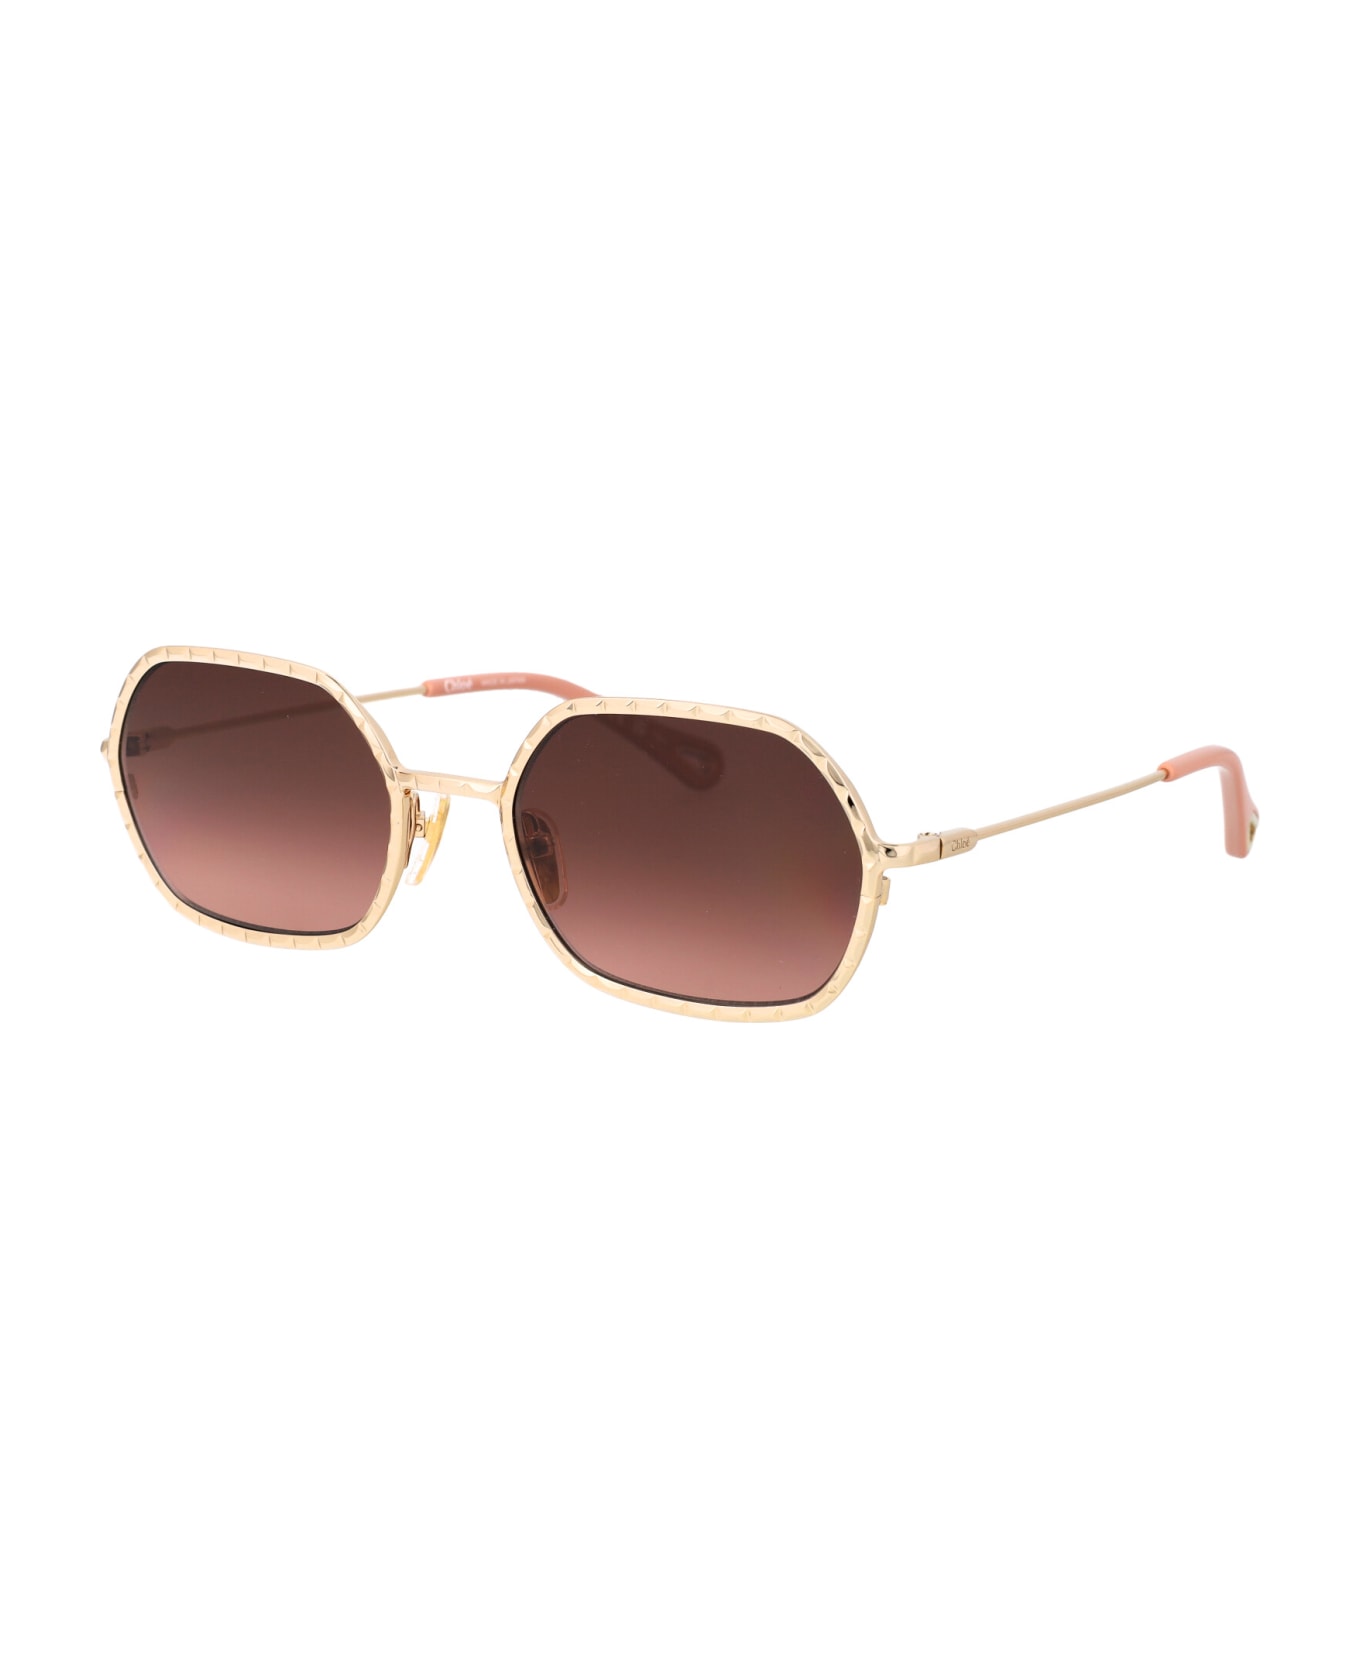 Chloé Eyewear Ch0231s Sunglasses - 002 GOLD GOLD COPPER